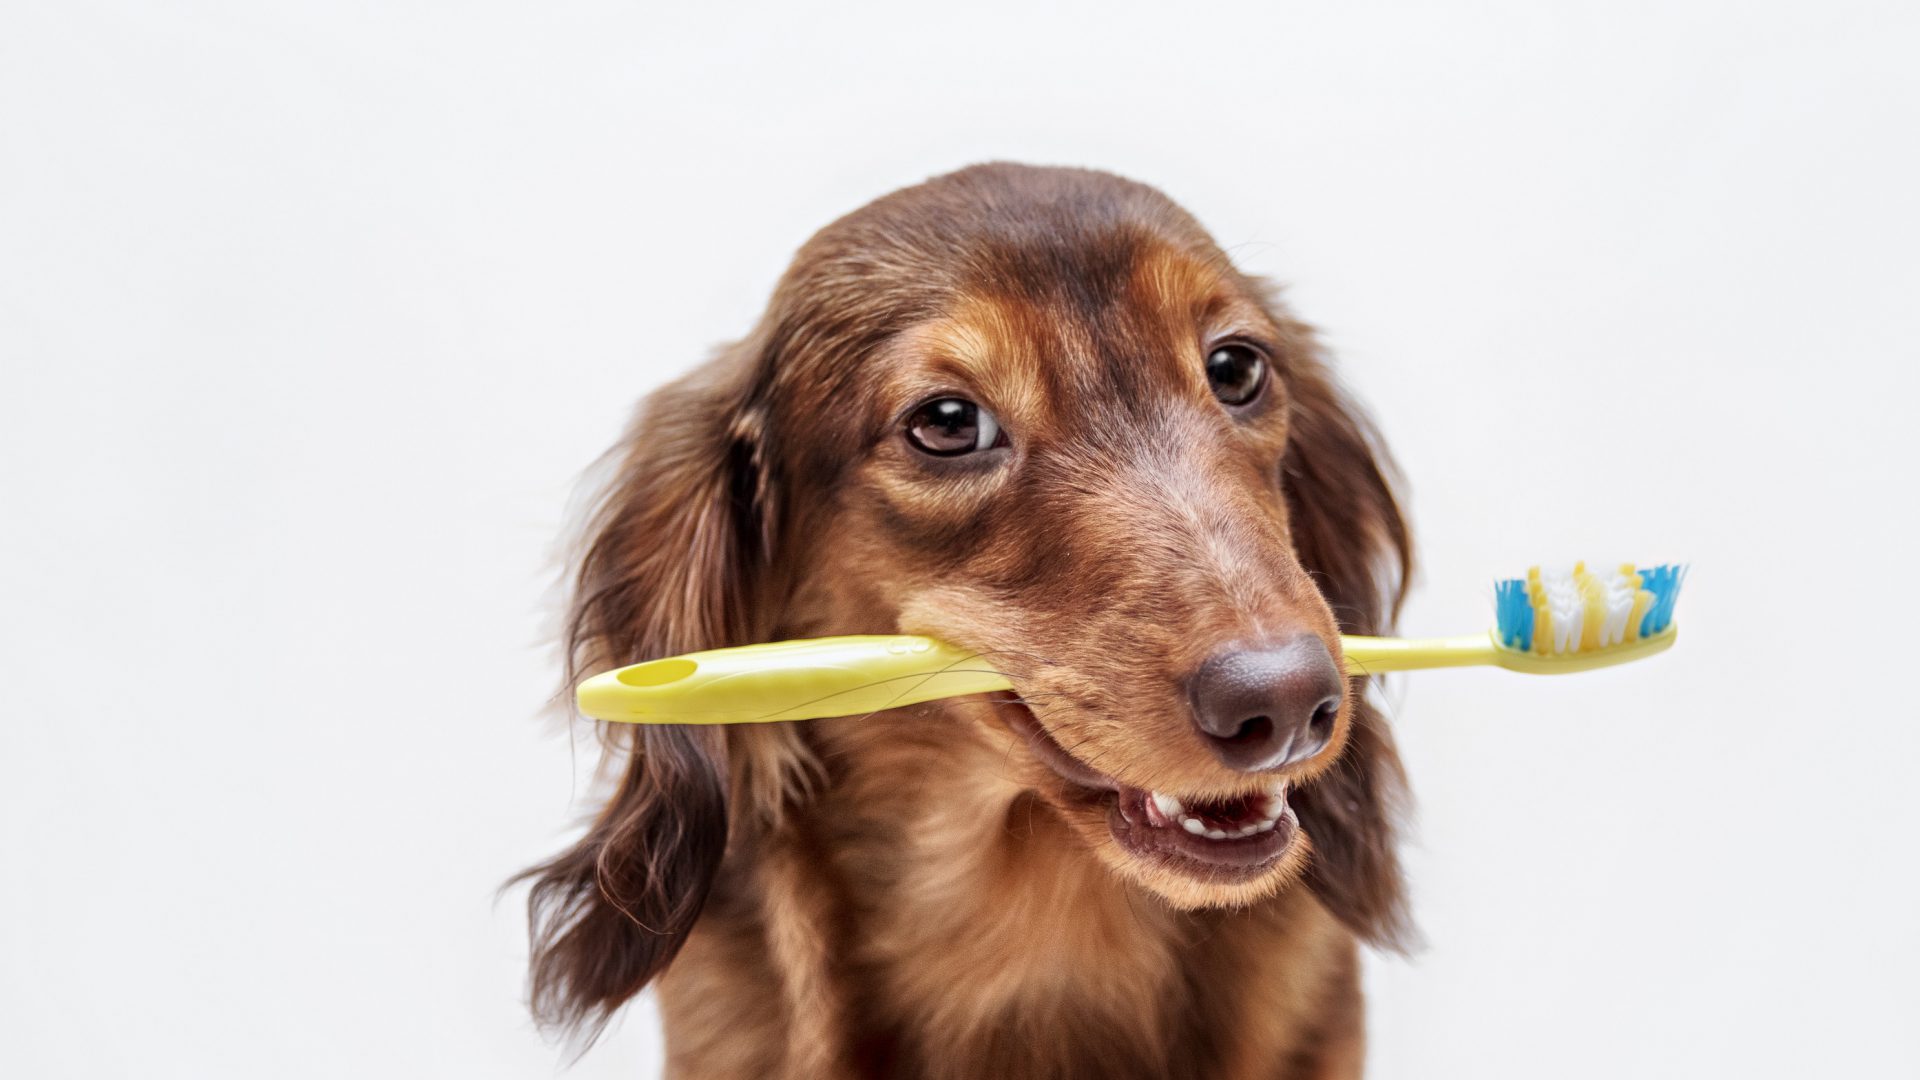 Vets urge owners to look after their pet’s teeth and avoid dental disease